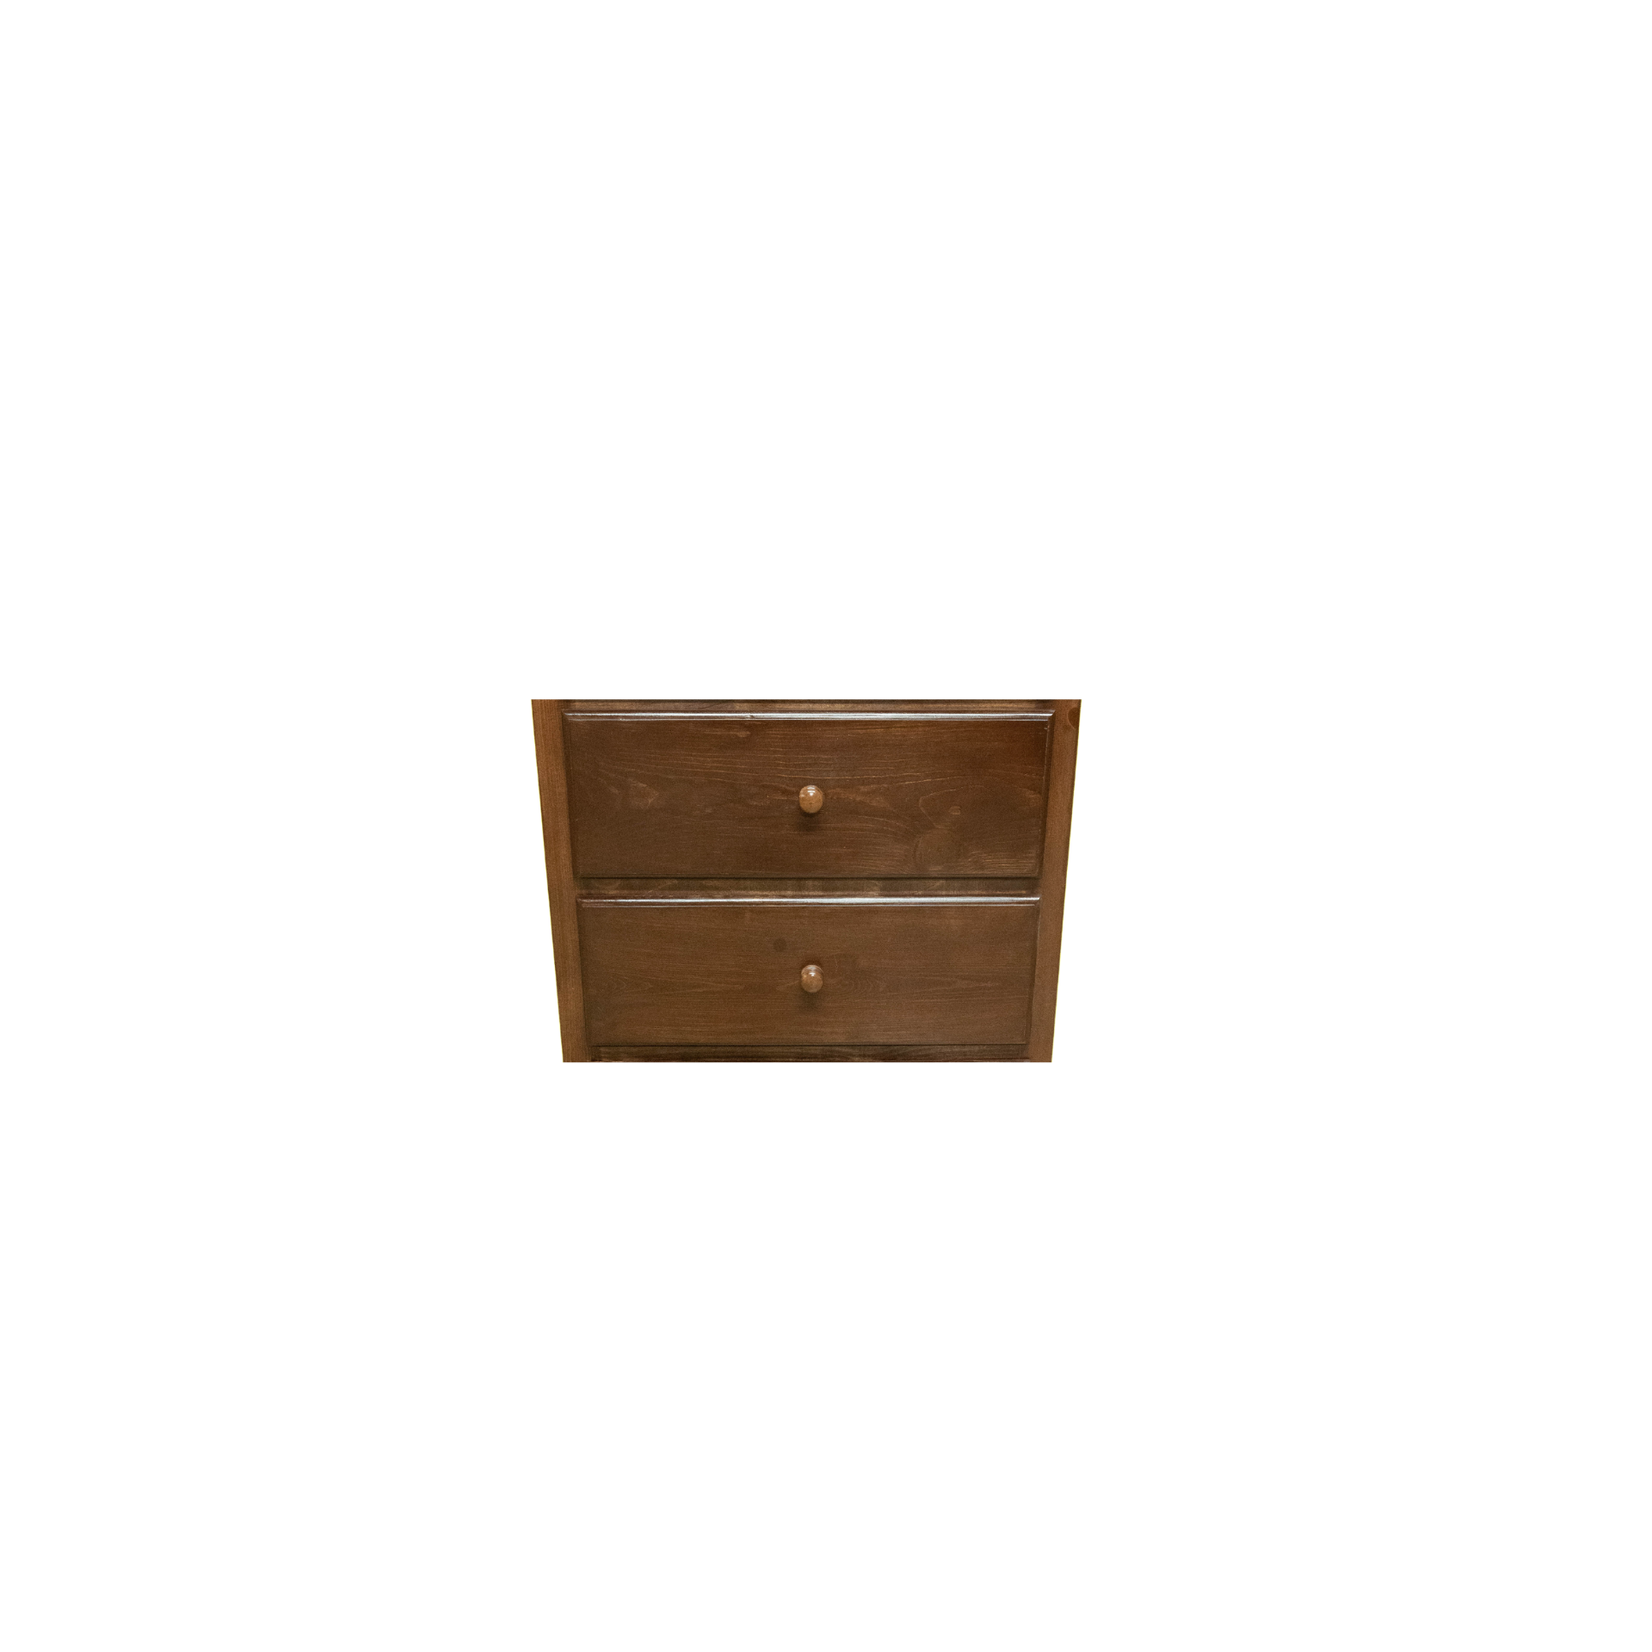 8 Drawer Pine Wood Dresser